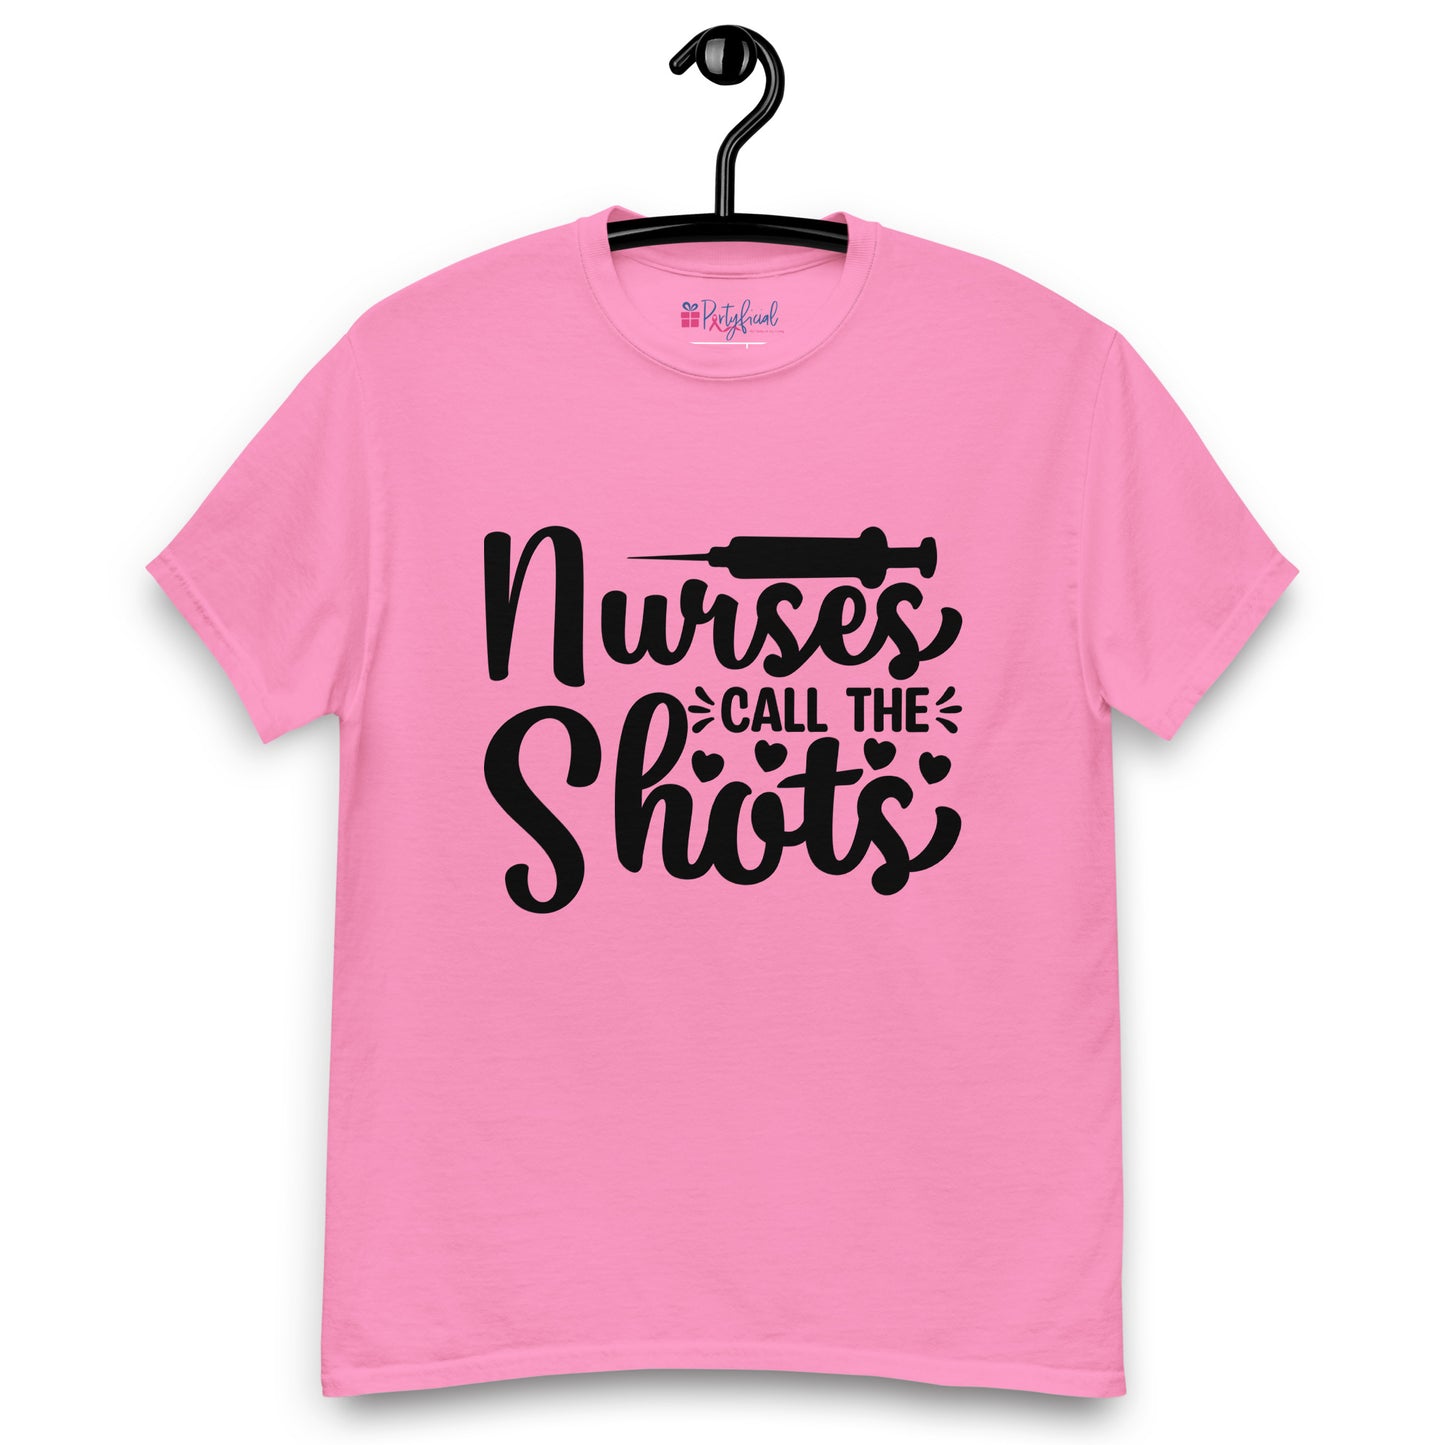 Nurses Call the Shots tee